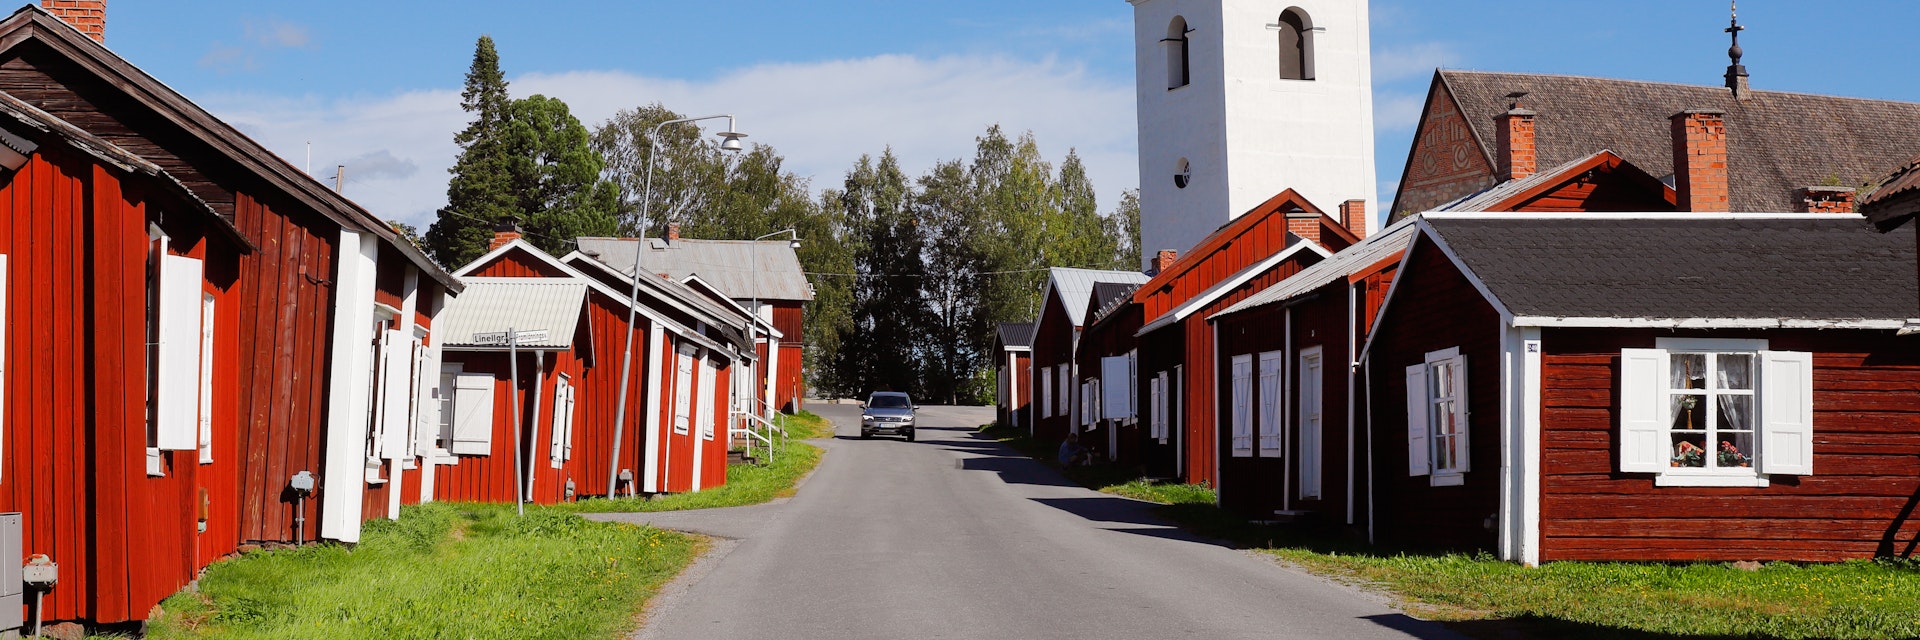 Gammelstad old church town in Sweden.